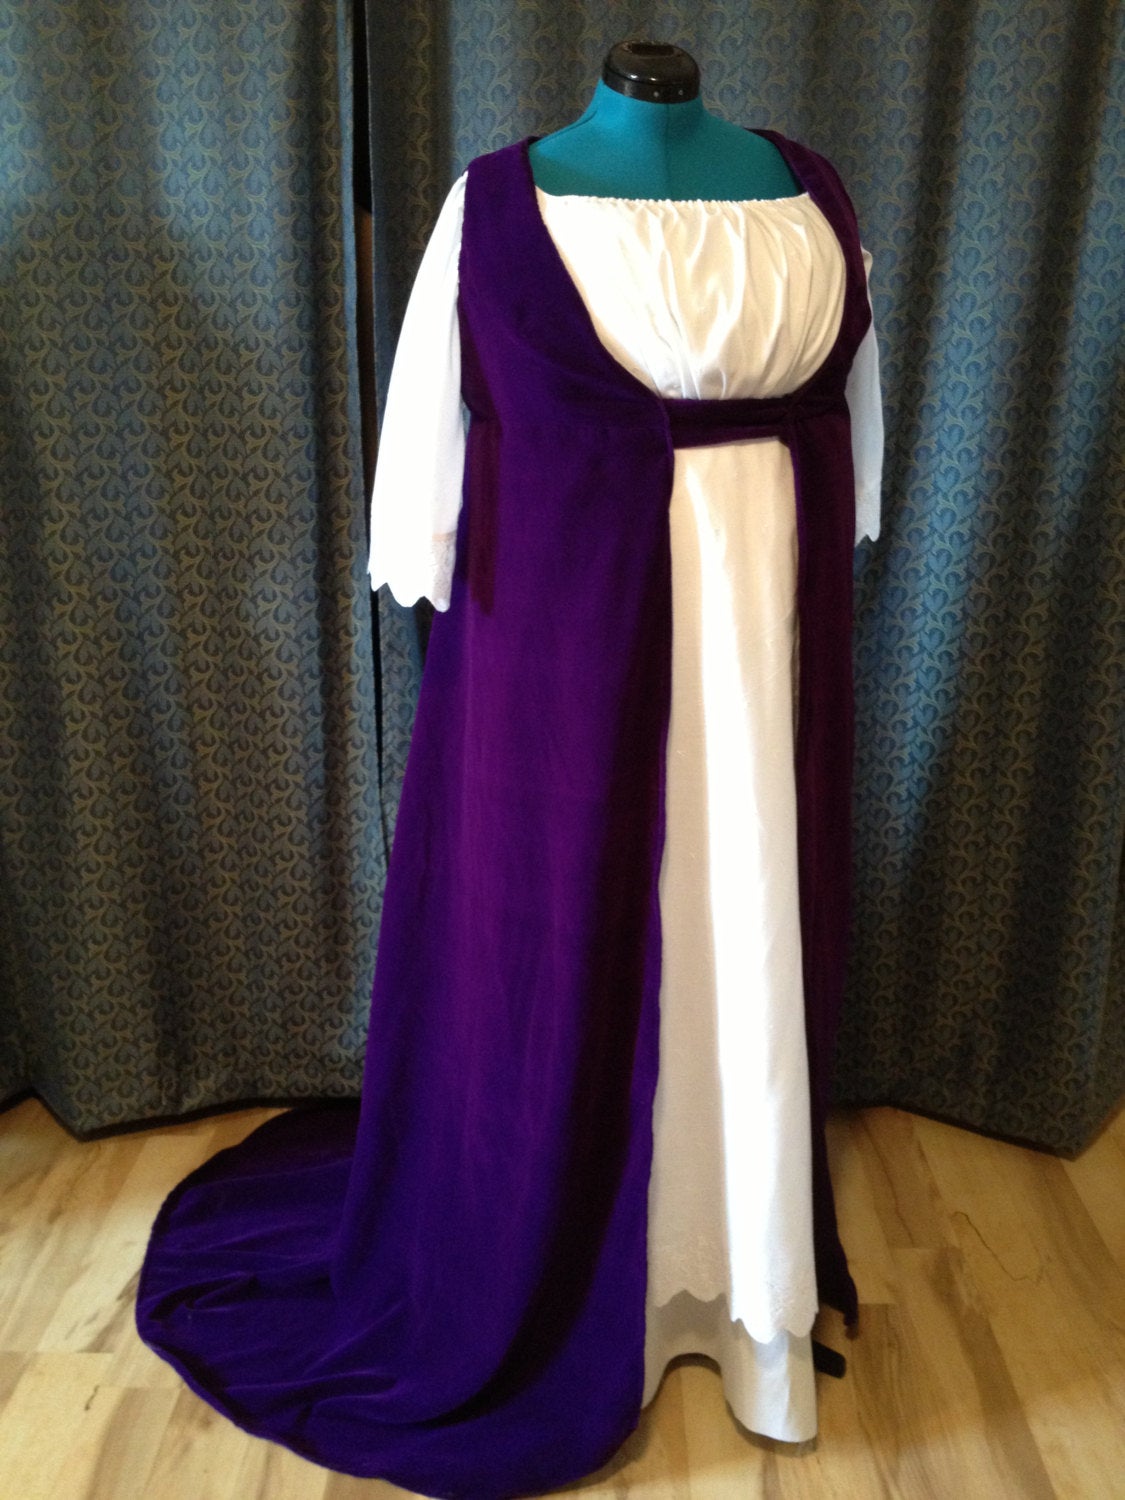 CUSTOM Regency Jane Austen Open Robe Over Dress Gown Pelisse